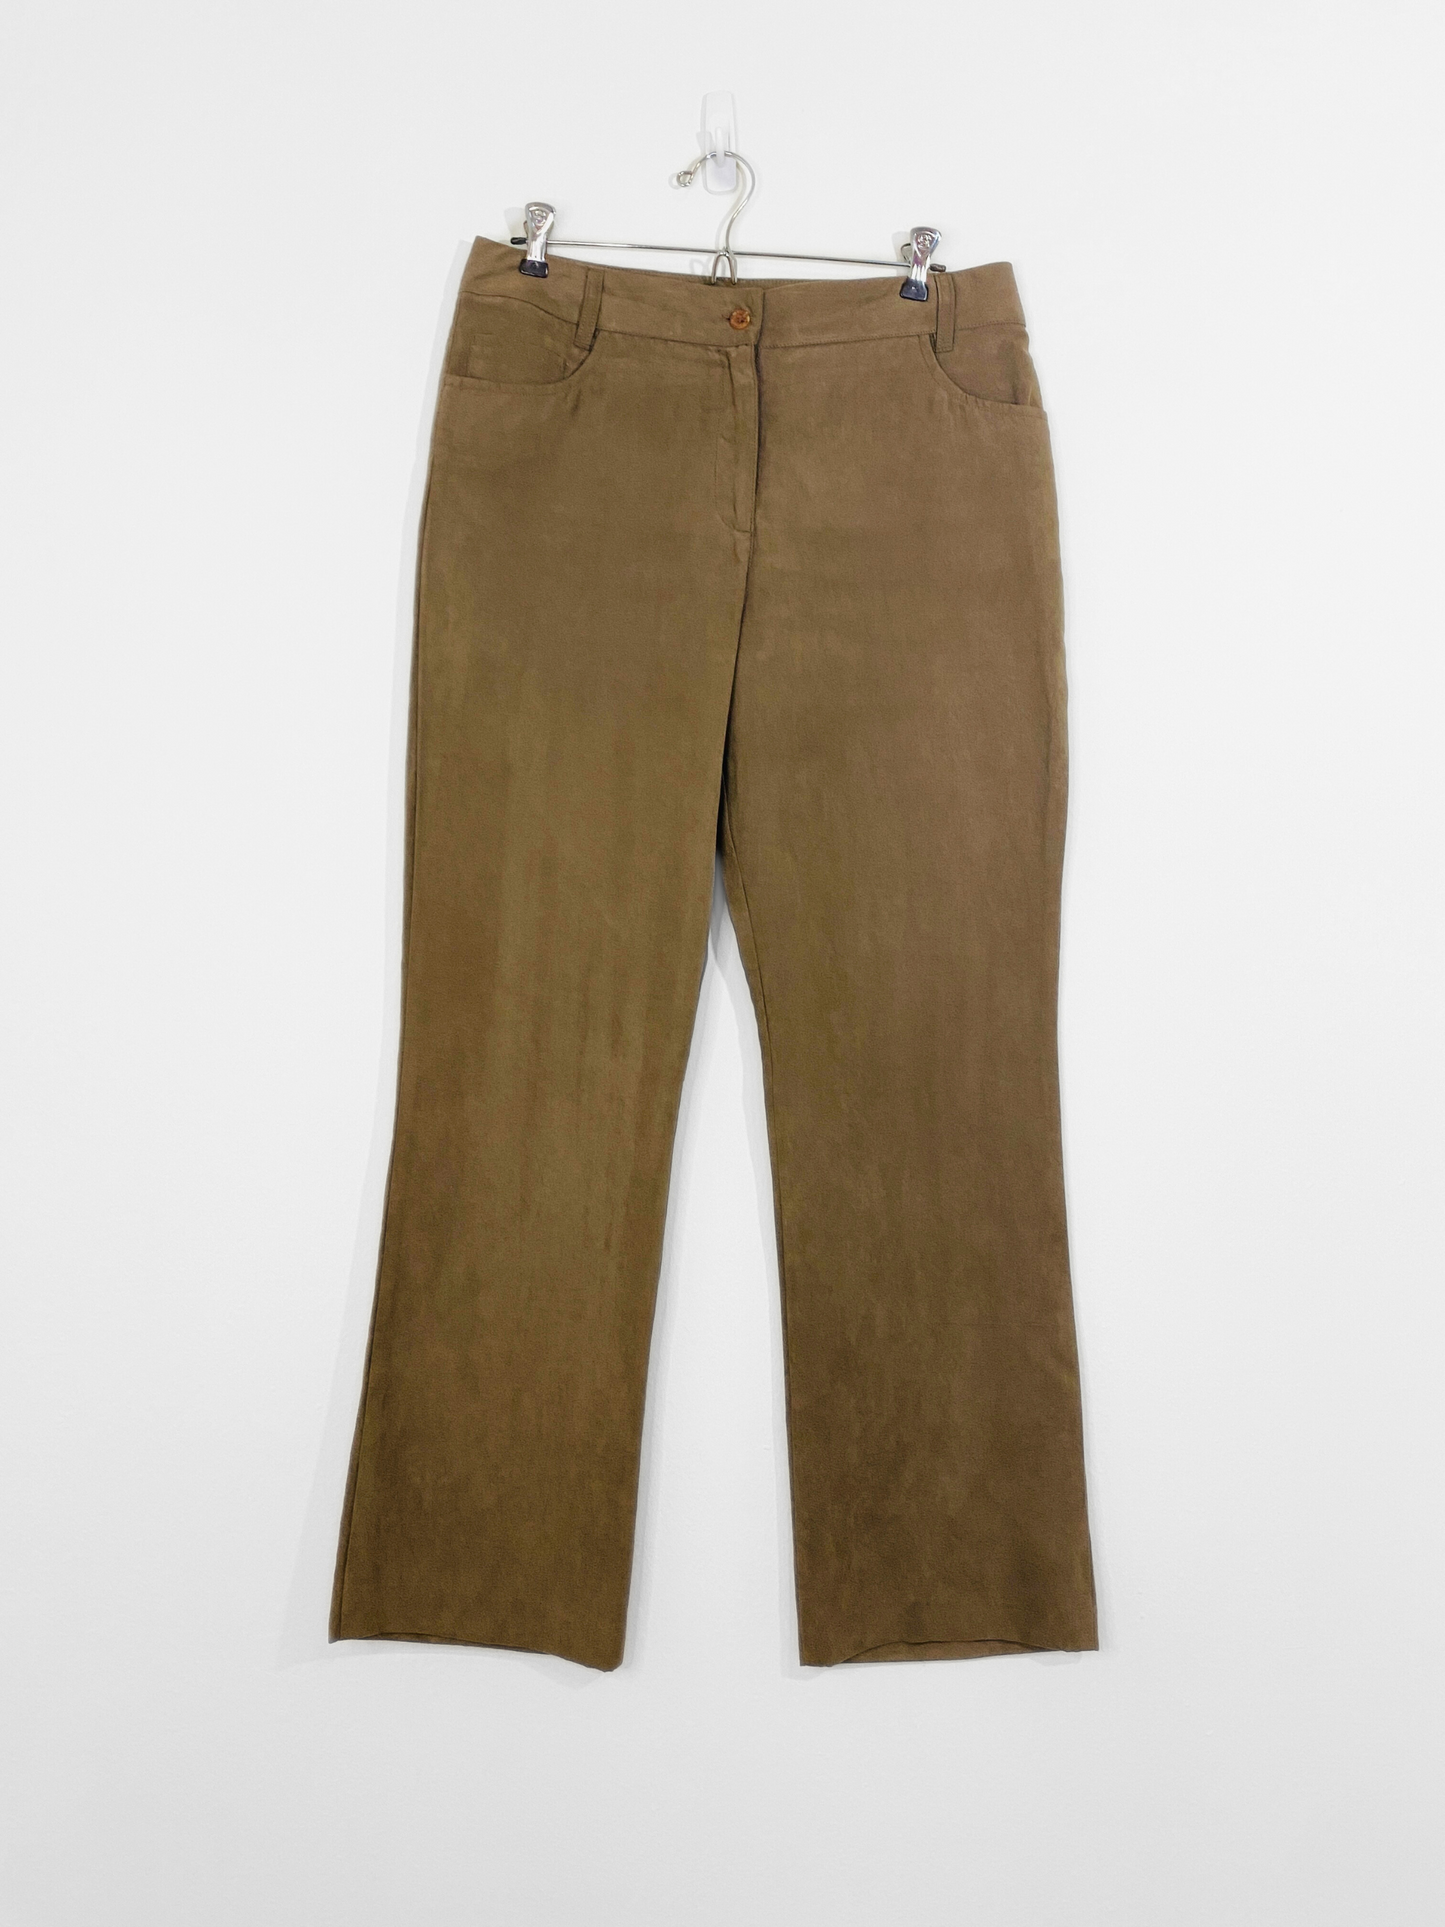 Suede Pants (Size 10)